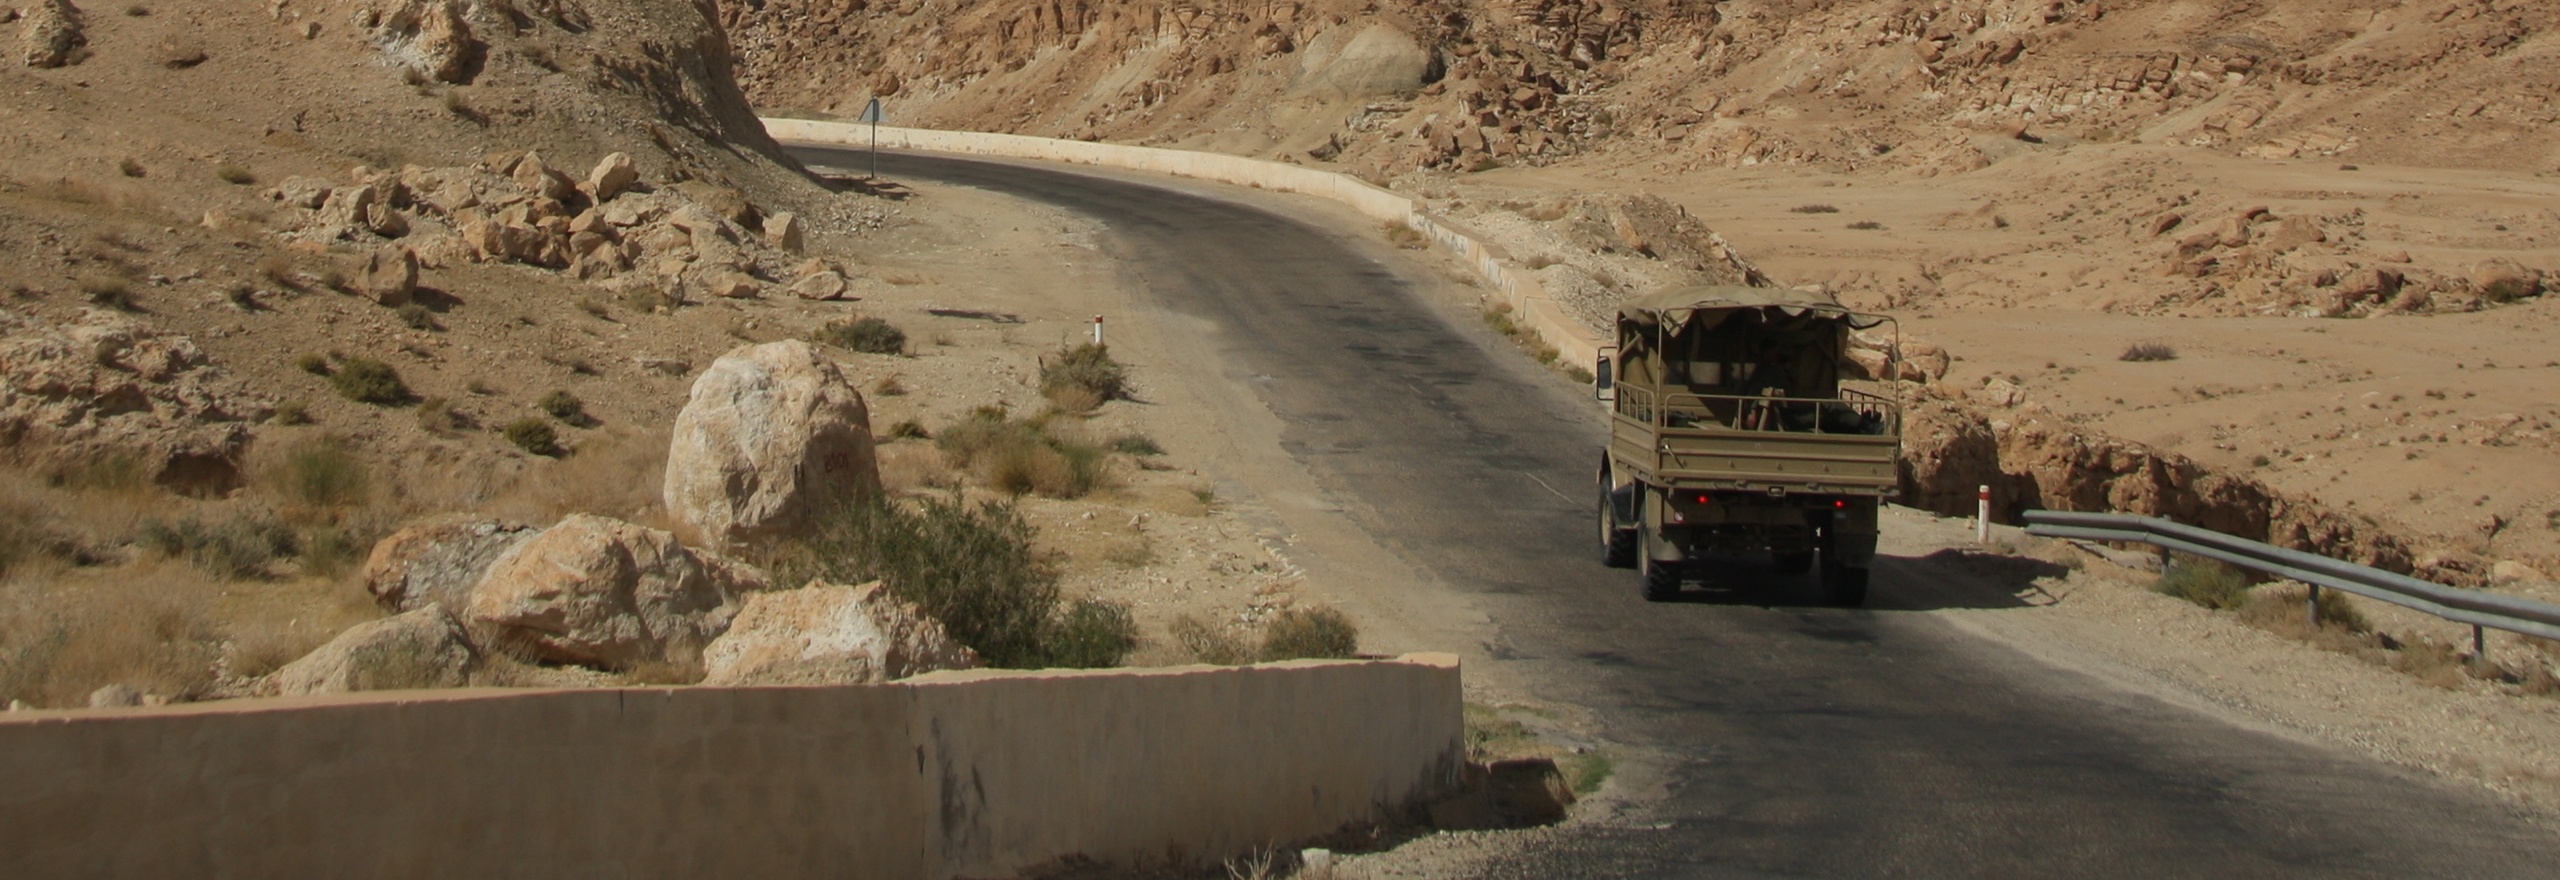 Military vehicle on desert road